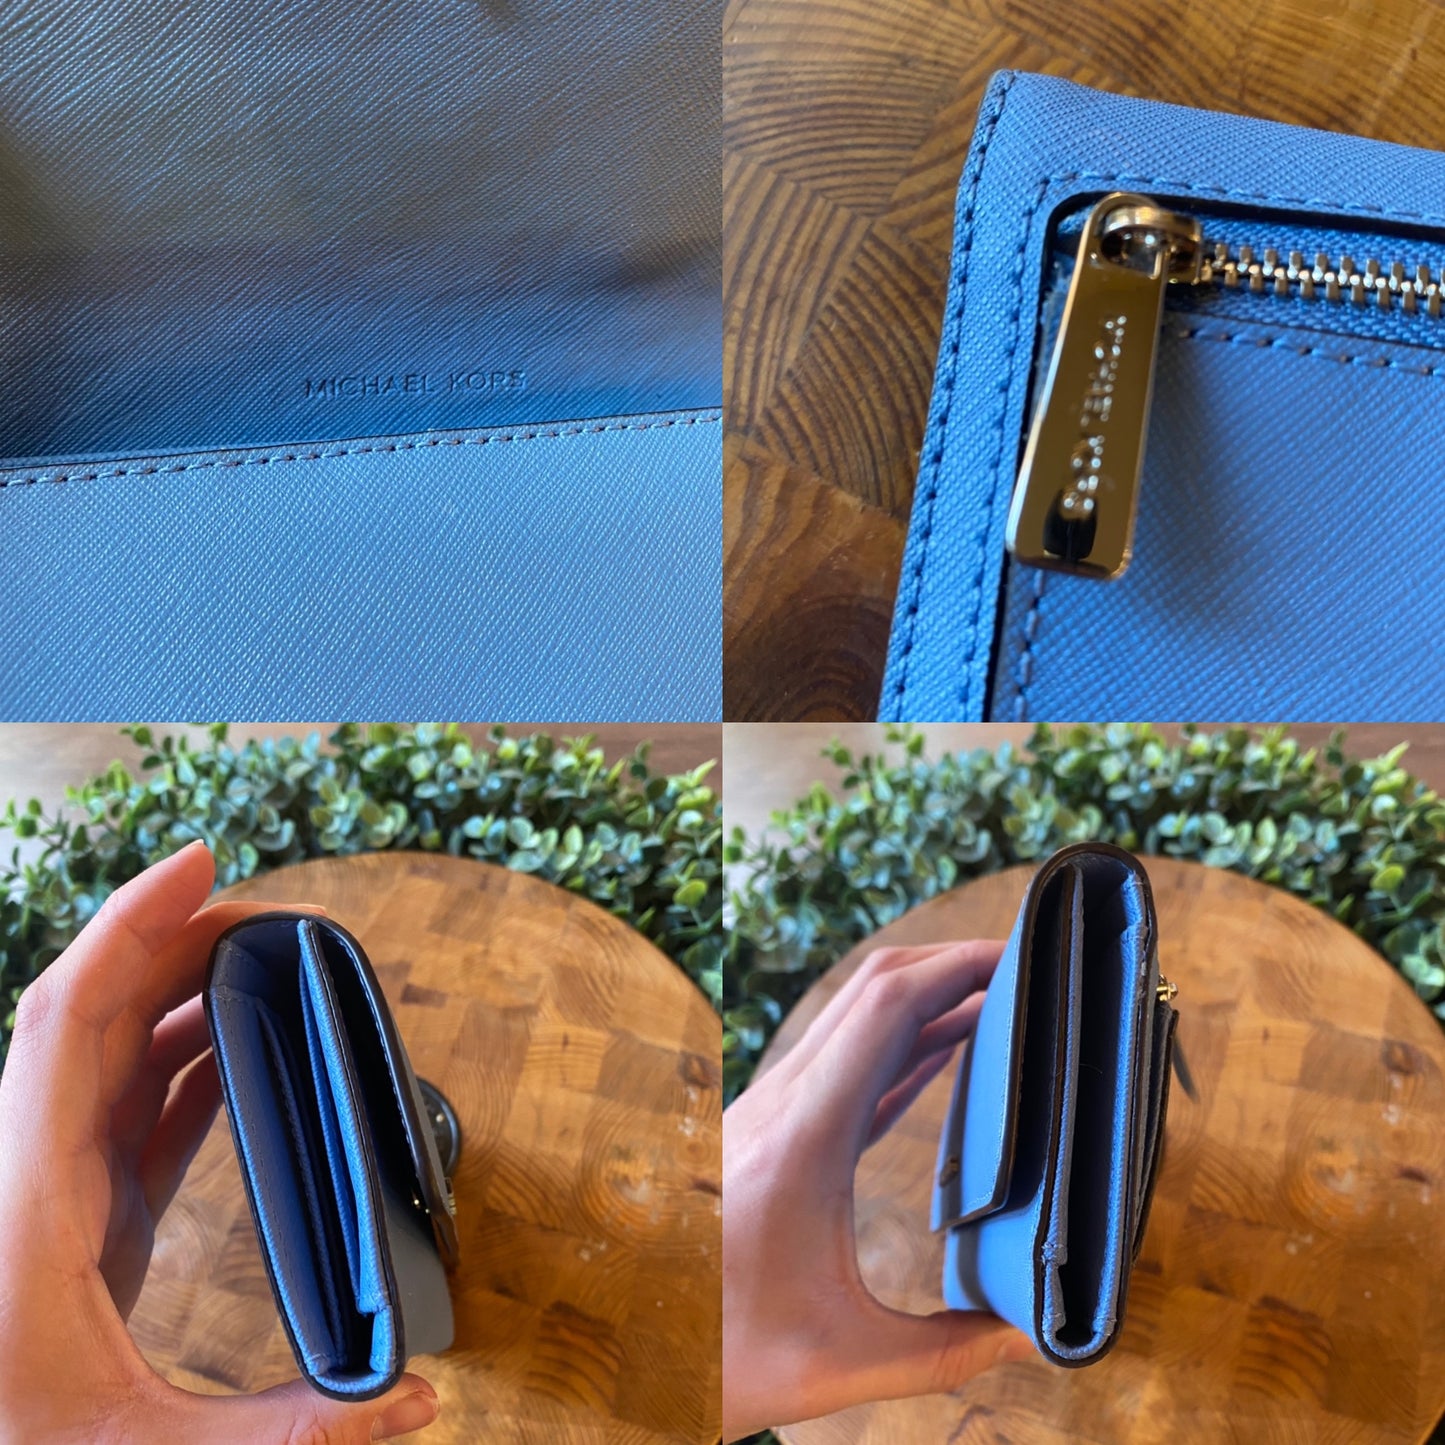 Michael Kors Leather Snap Wallet